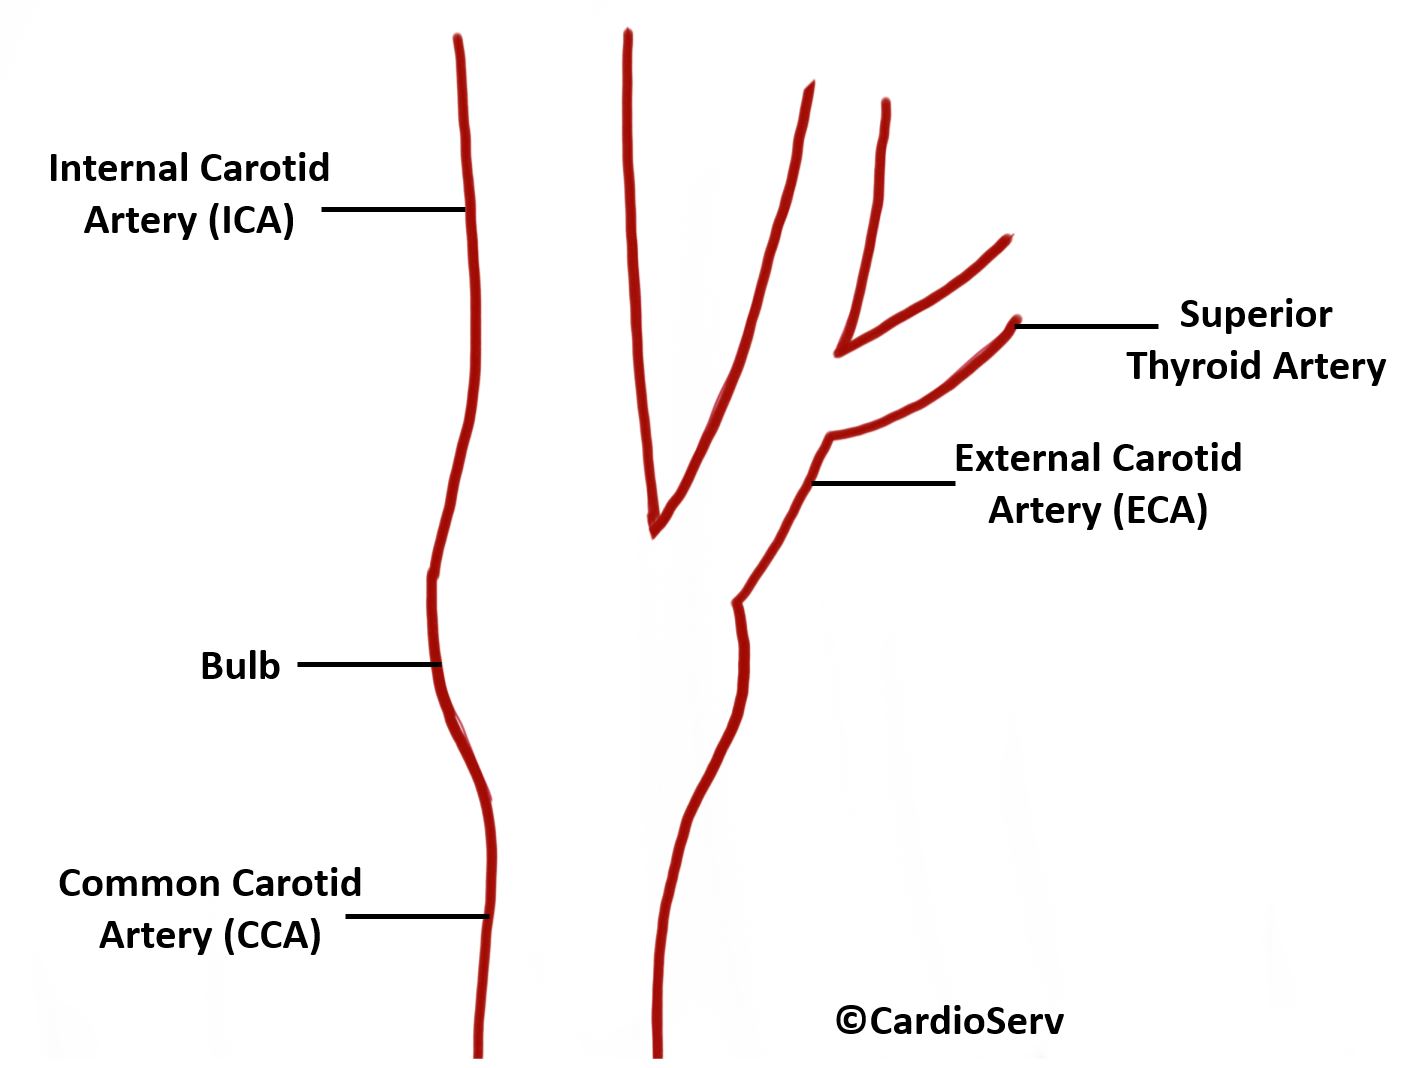 Common Carotid Artery (CCA)